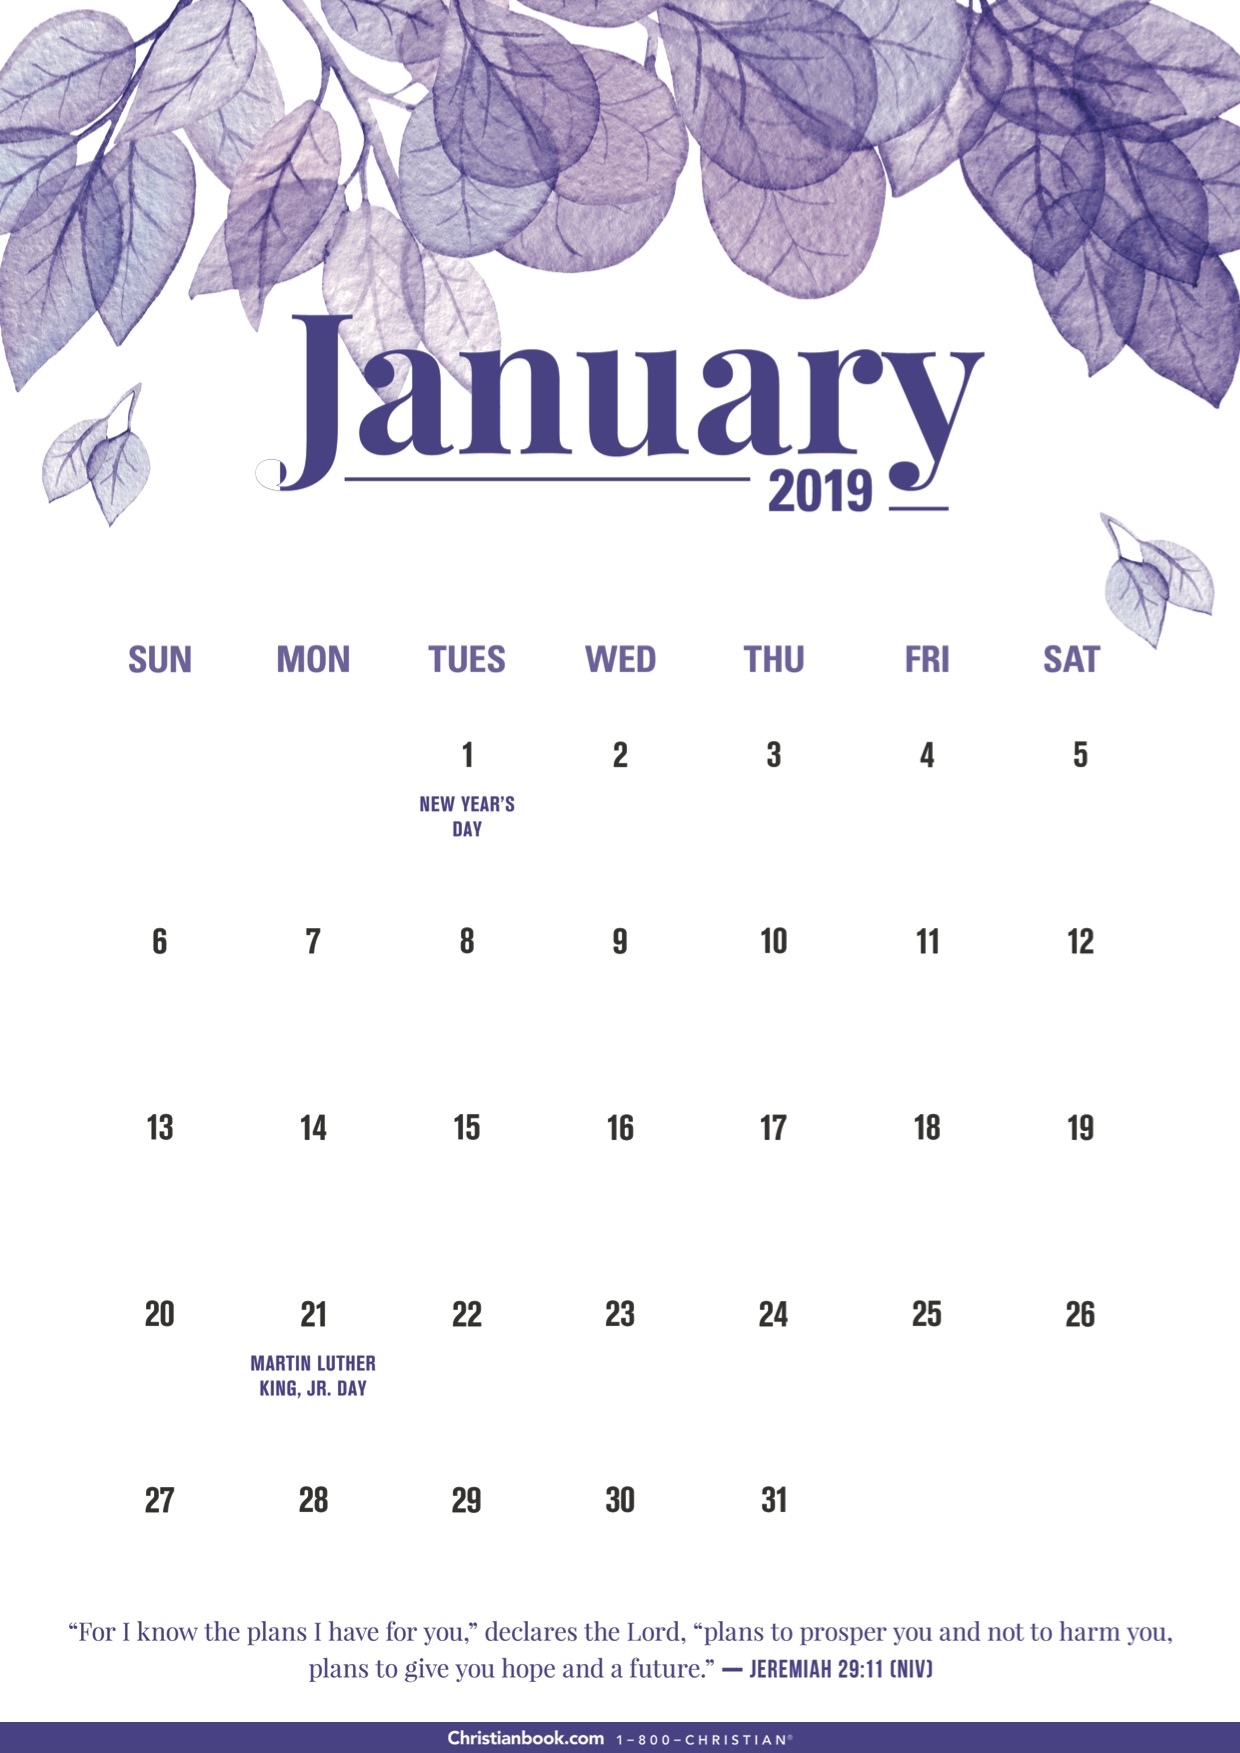 january-2019-calendar-download-christianbook-blog